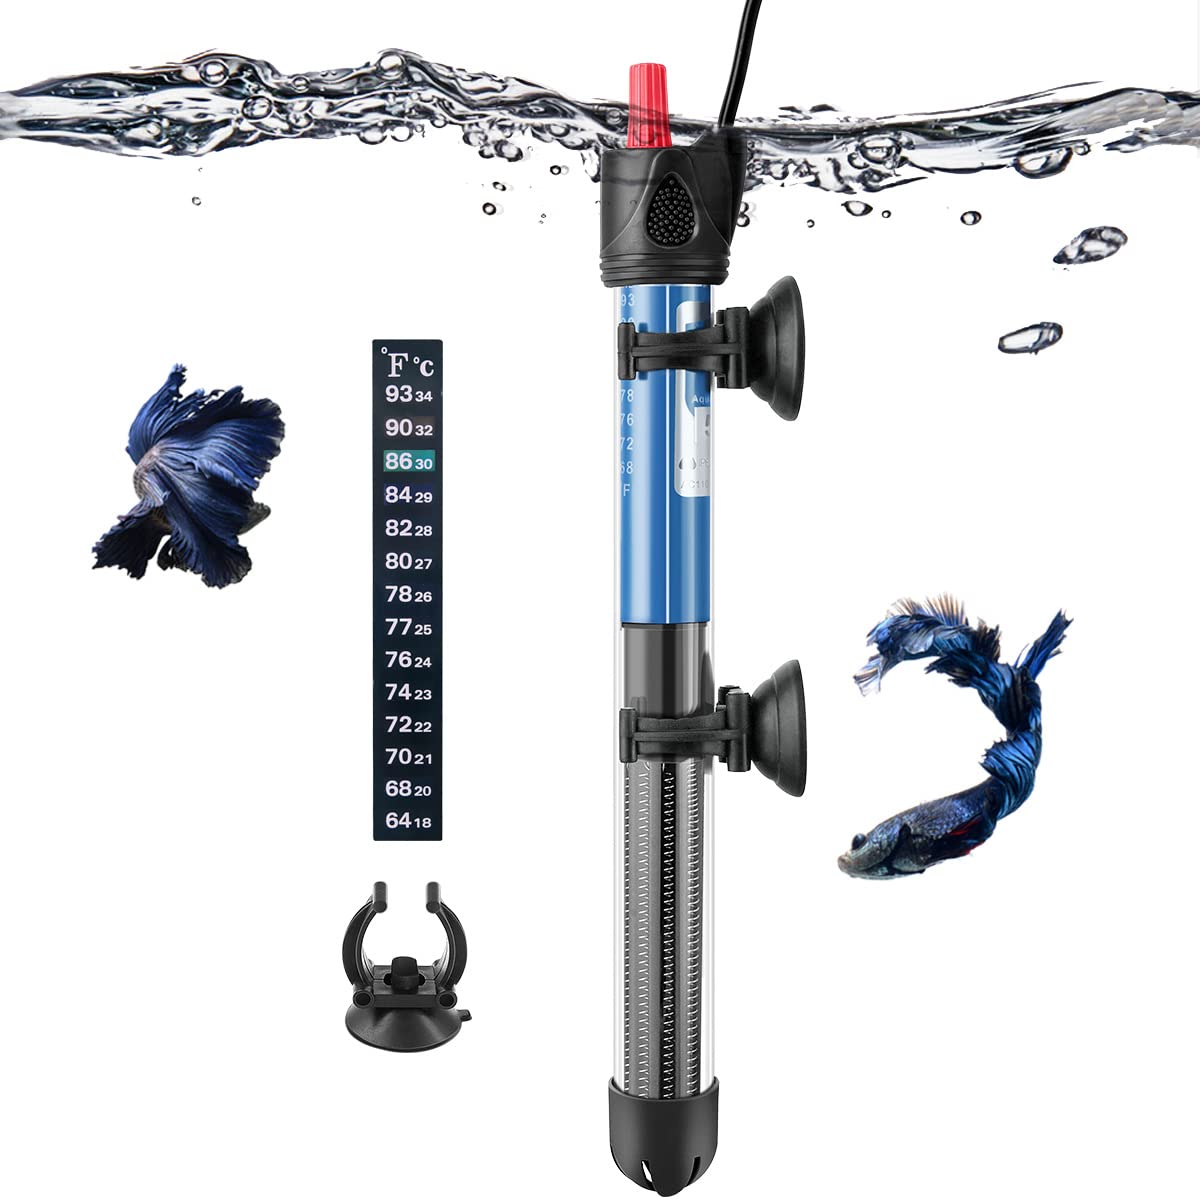 Hitop 300W Adjustable Aquarium Heater for 5 – 70 Gallon Fish Tank